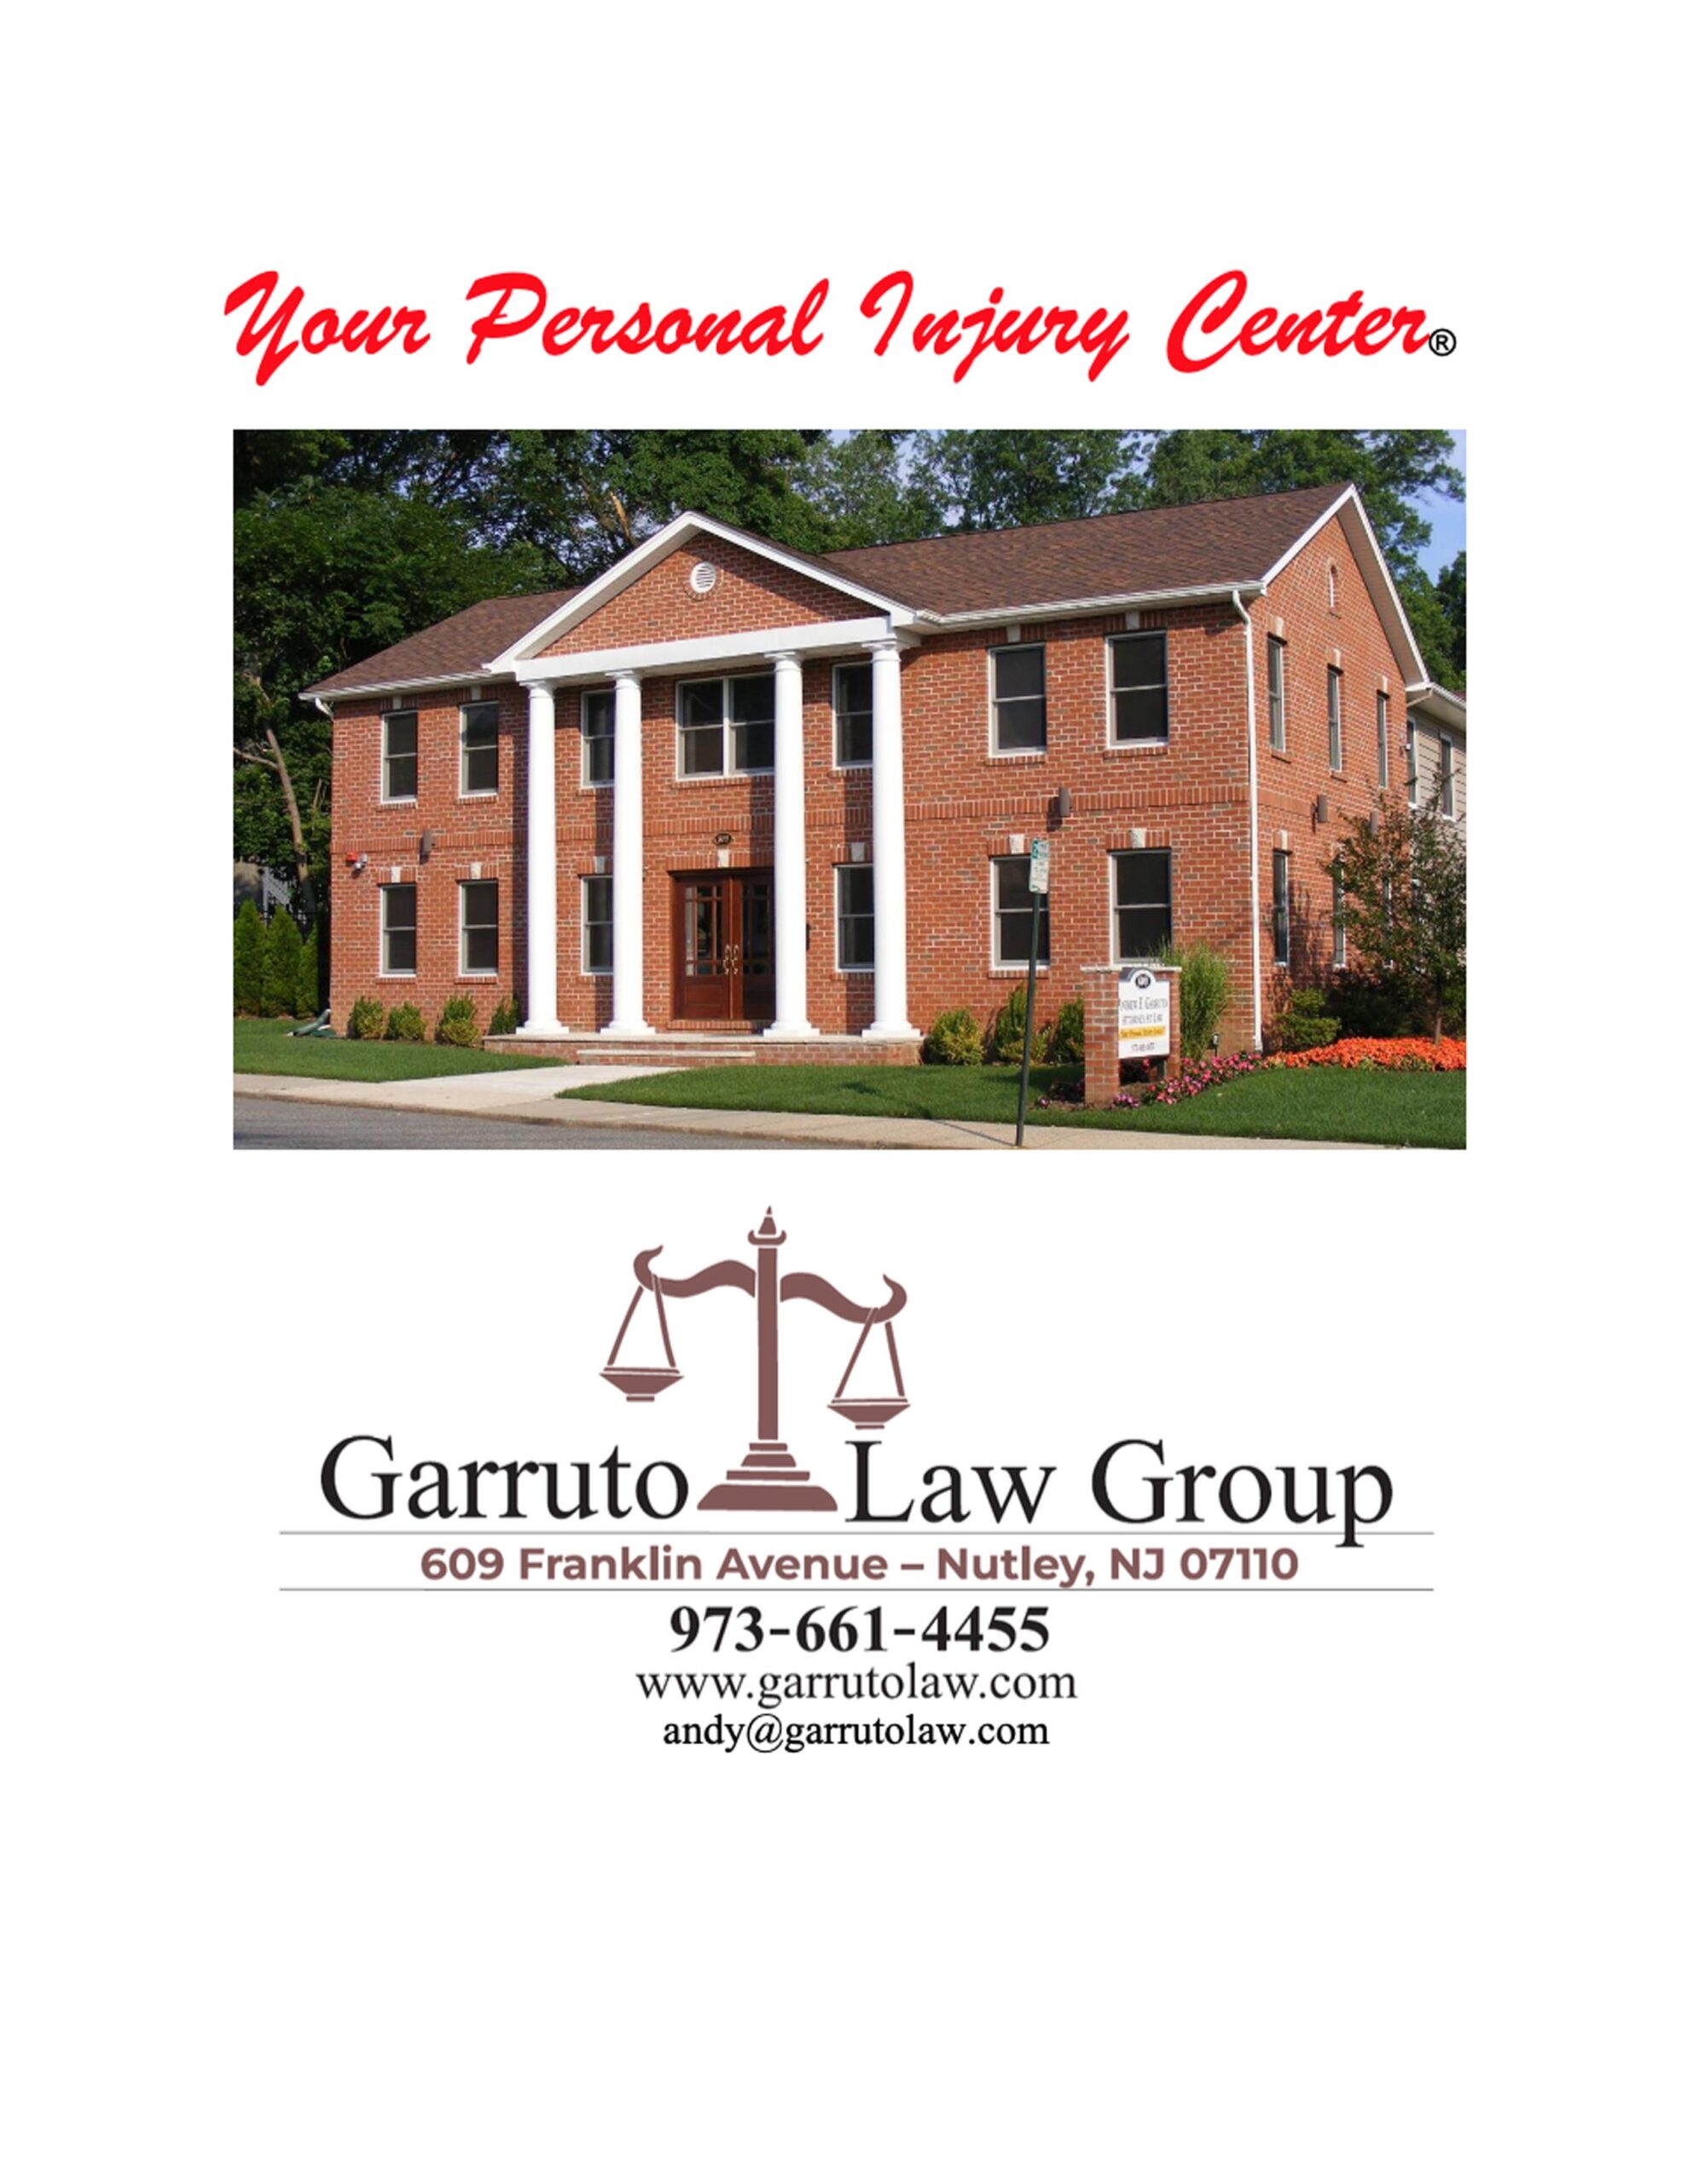 Garruto Law Group